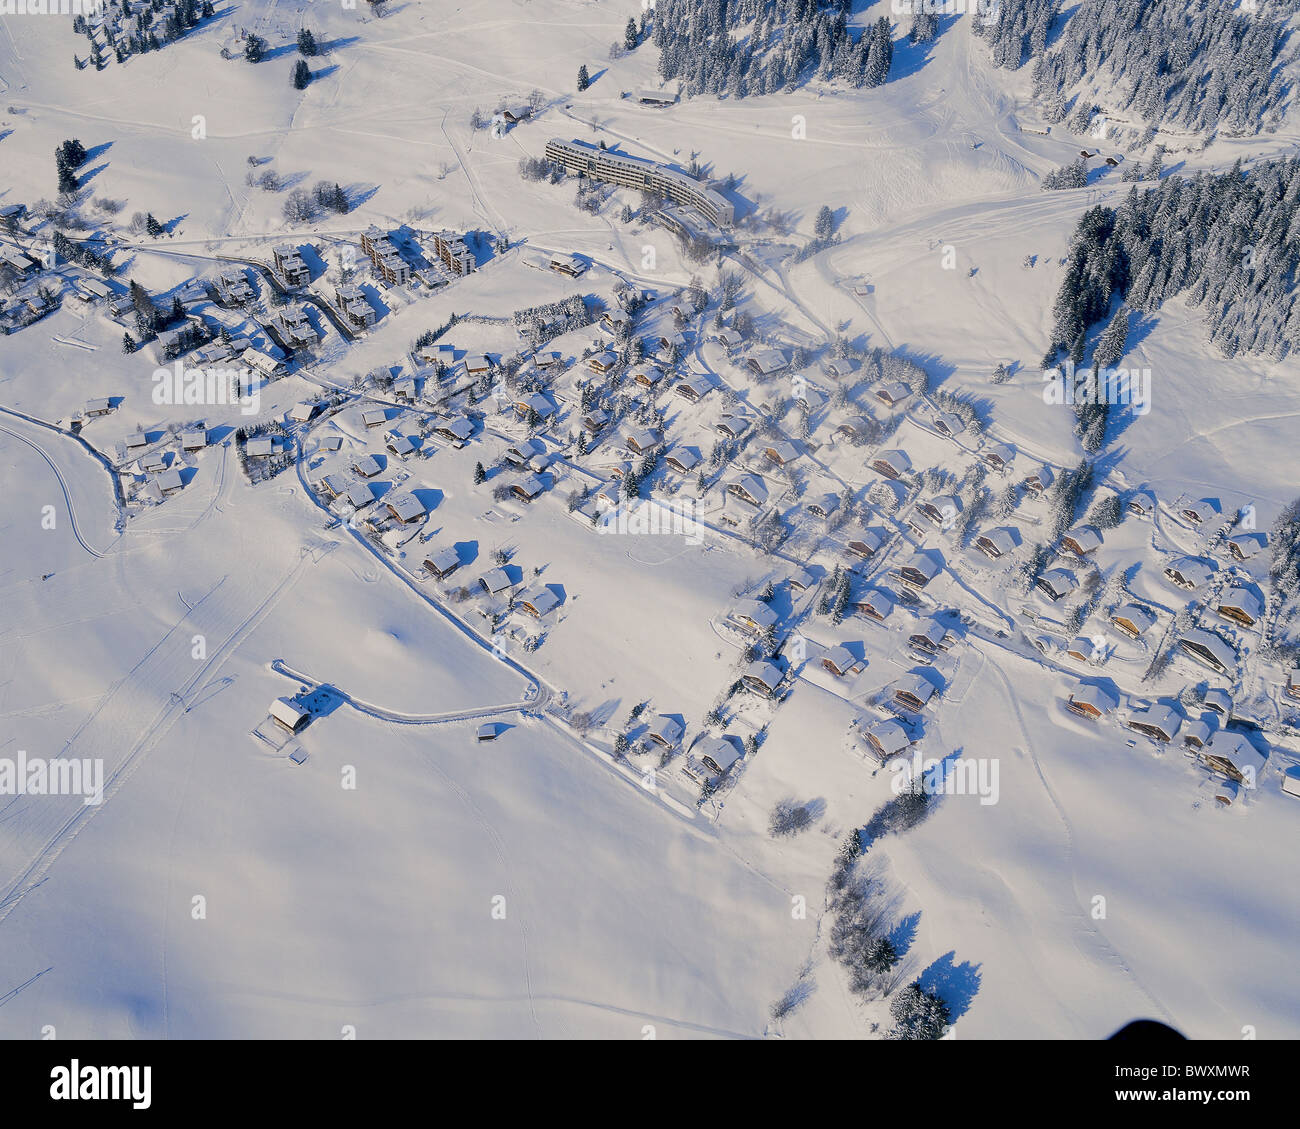 Svizzera Europa Vaud Leysin invernale coperto di neve e neve foto aerea Foto Stock